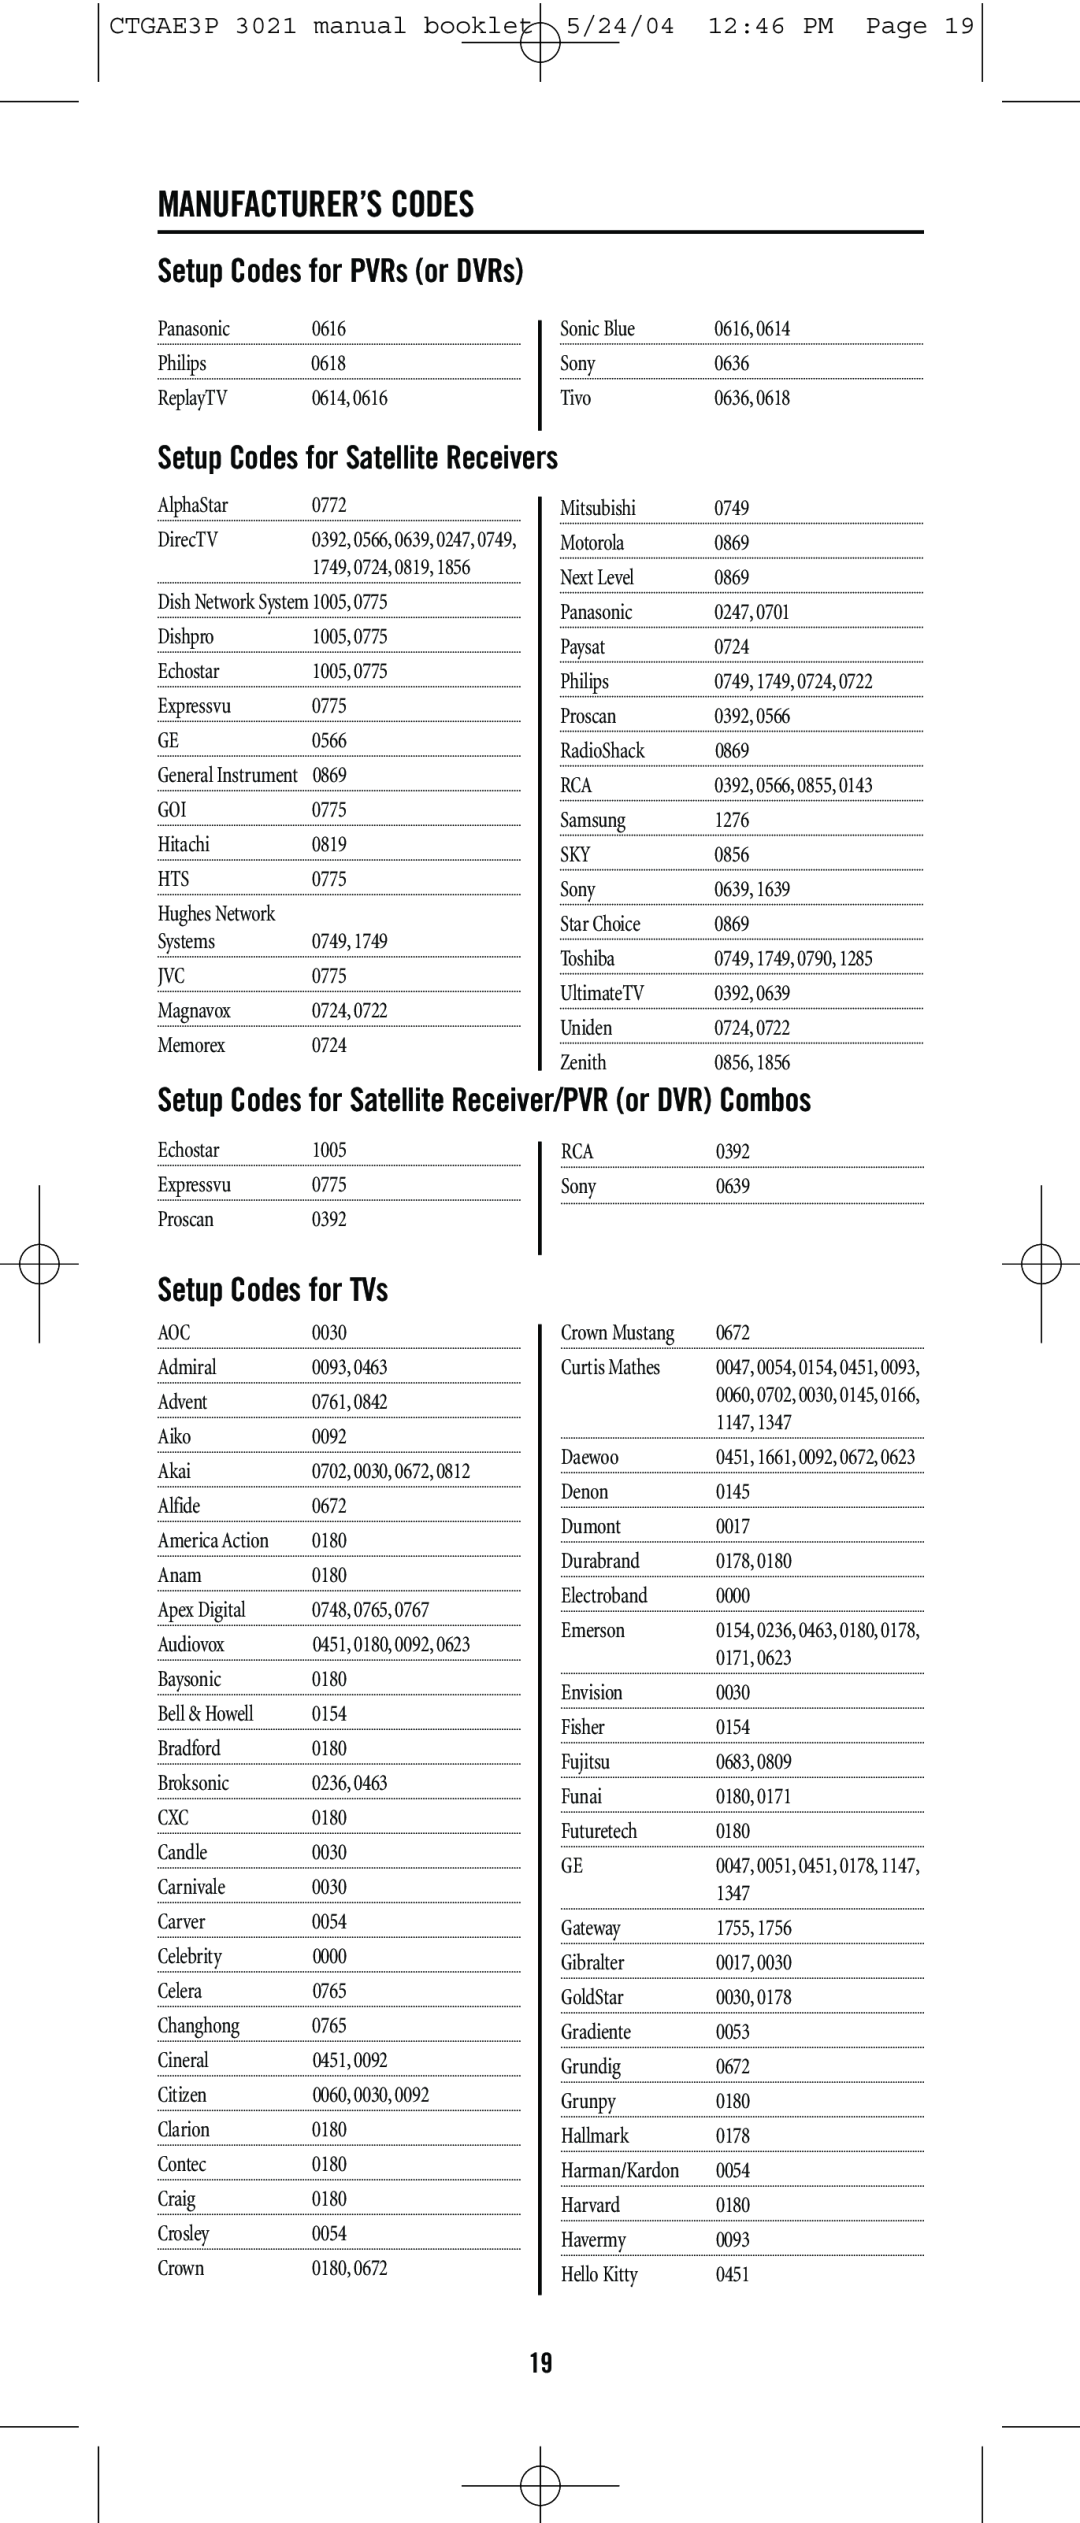 Universal Electronics URC-3021 Setup Codes for Satellite Receivers, Setup Codes for Satellite Receiver/PVR or DVR Combos 